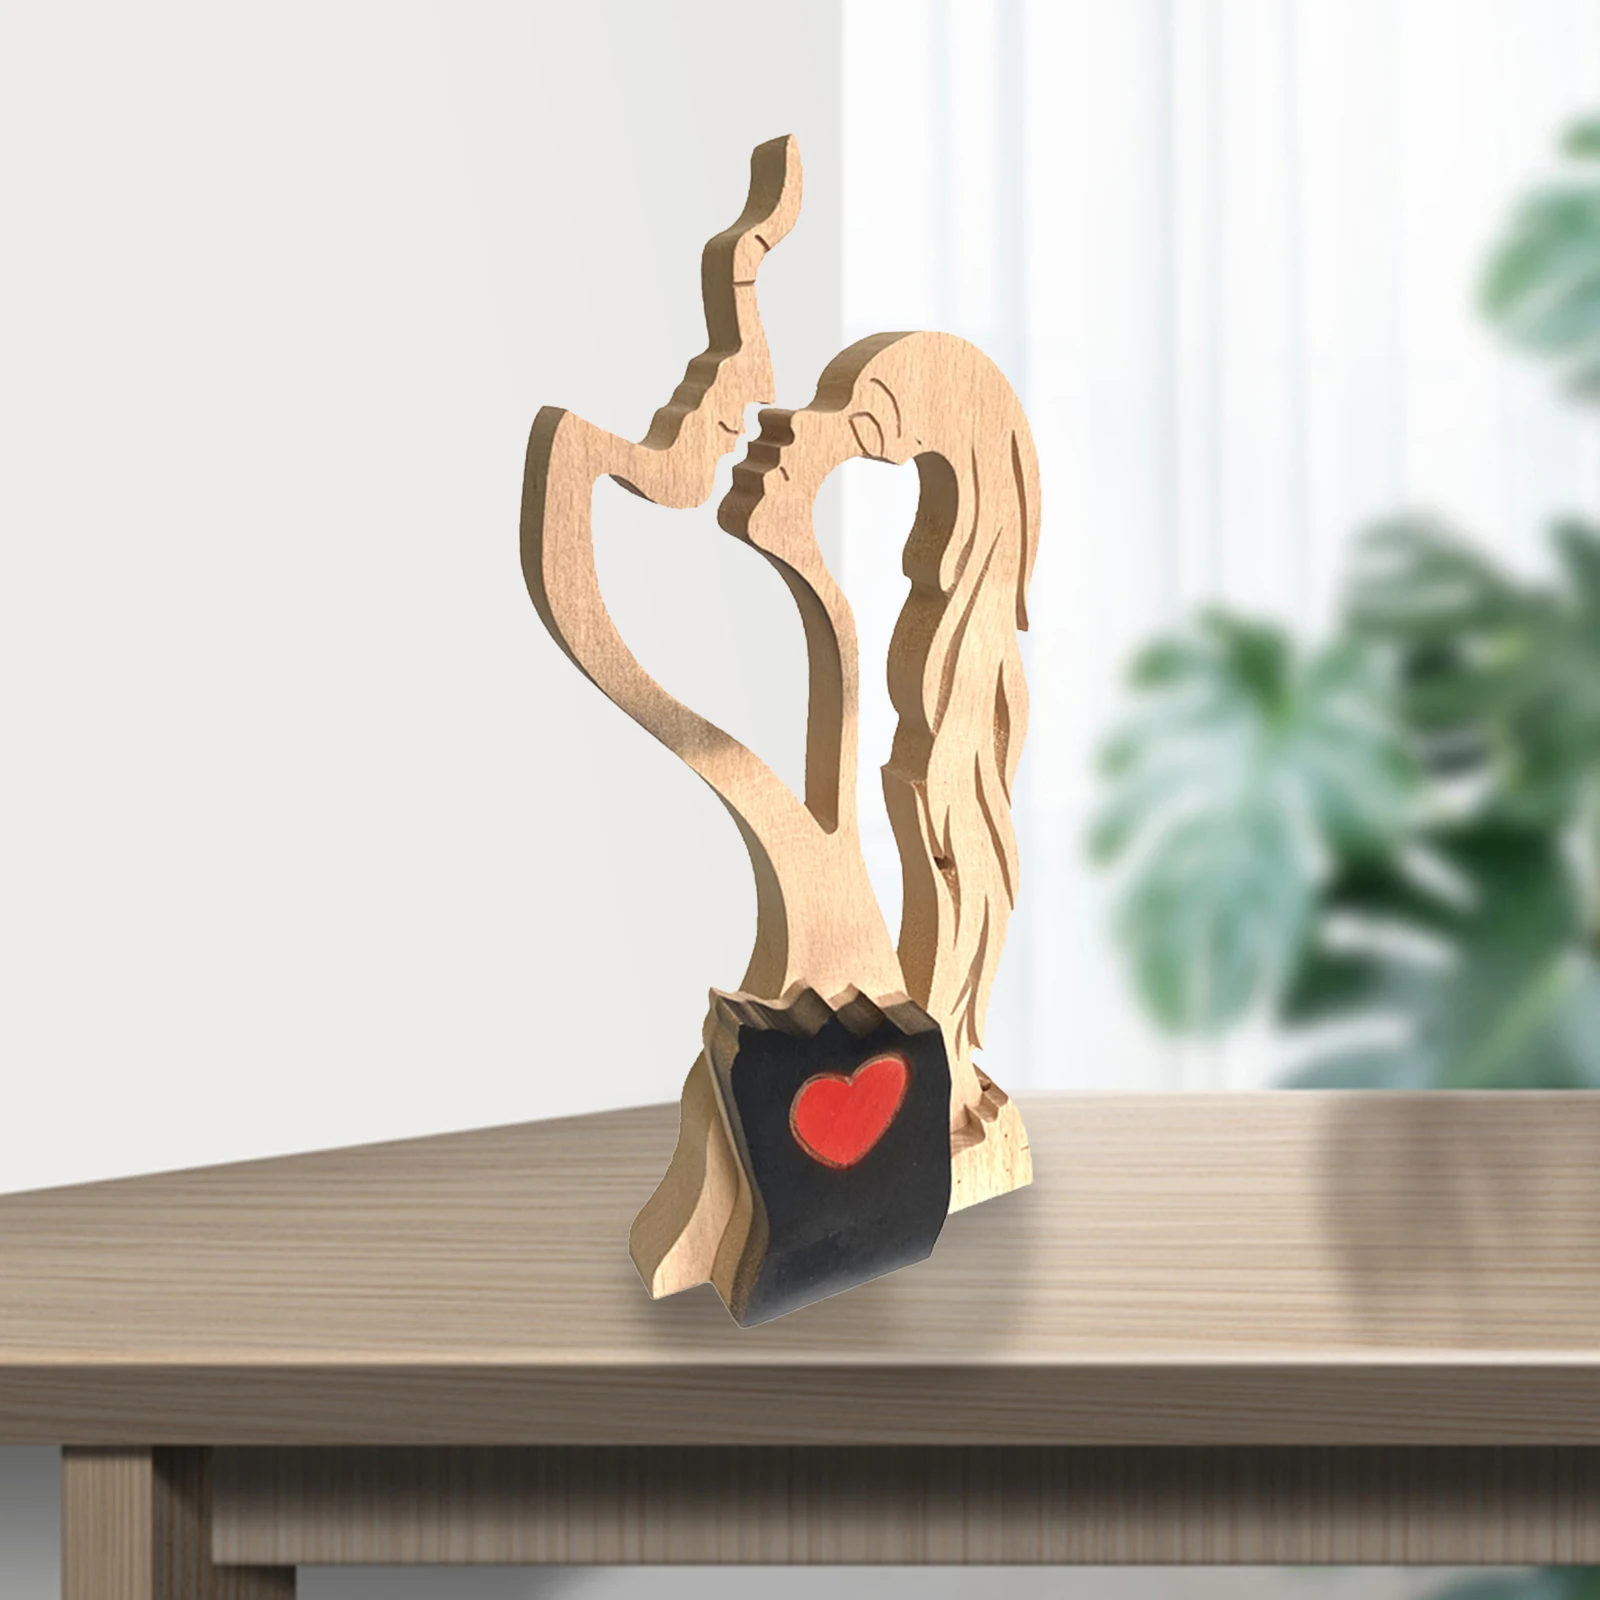 Affectionate Couple Wooden Sculpture Art Passionate Love Kissing Figurine Statue Romantic Ornament Home Office Decoration